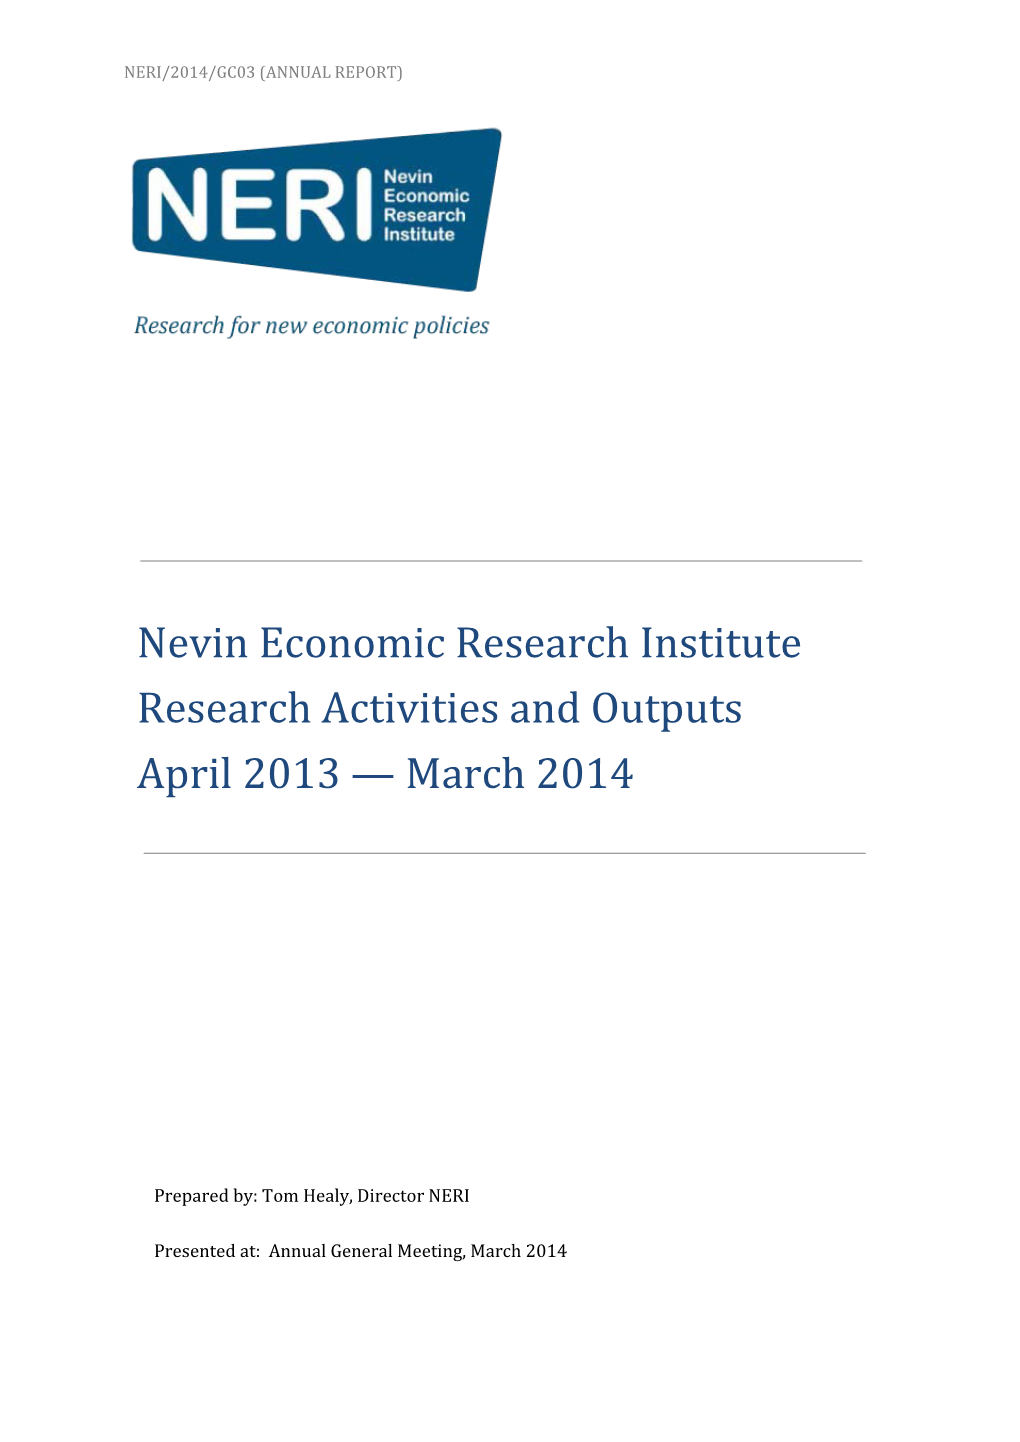 NERI Annual Report 2014